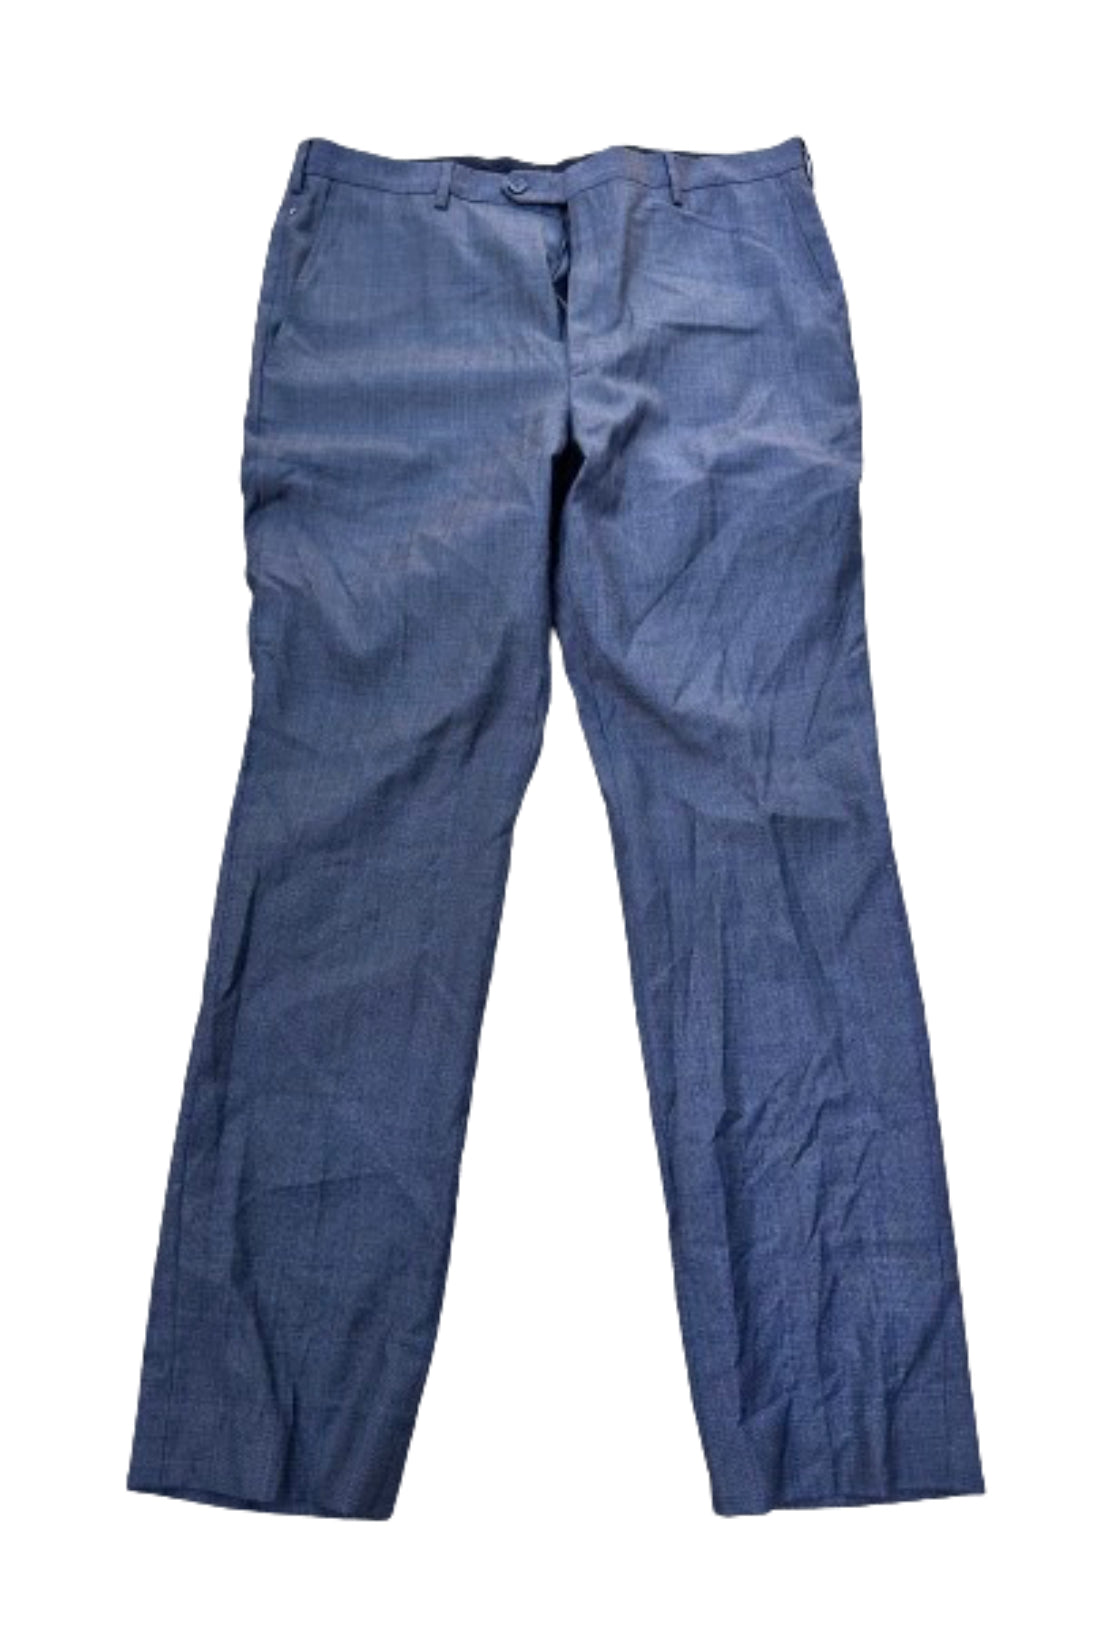 MAD MEN: Don's Grey & Black Italian made Pants (36)